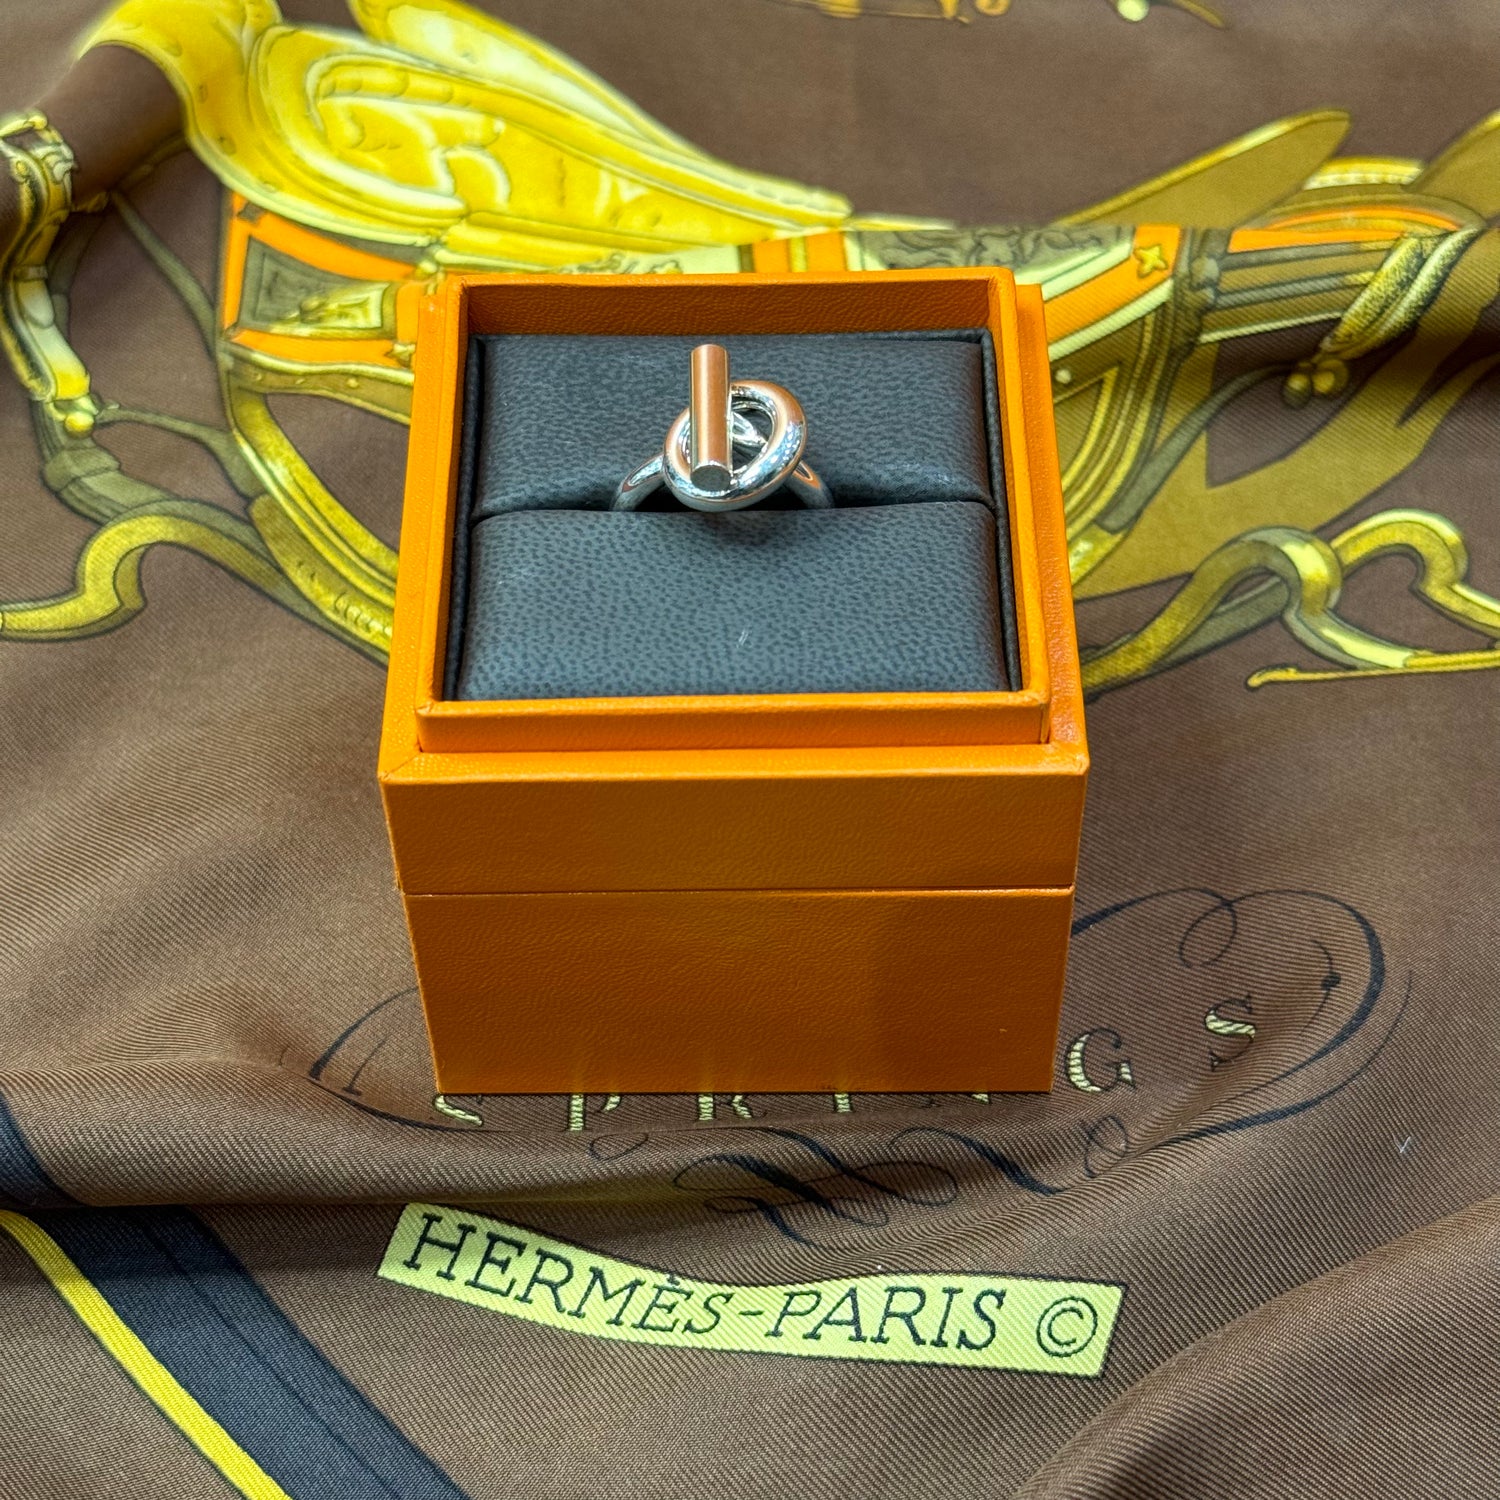 Hermès - Croisette MM ring